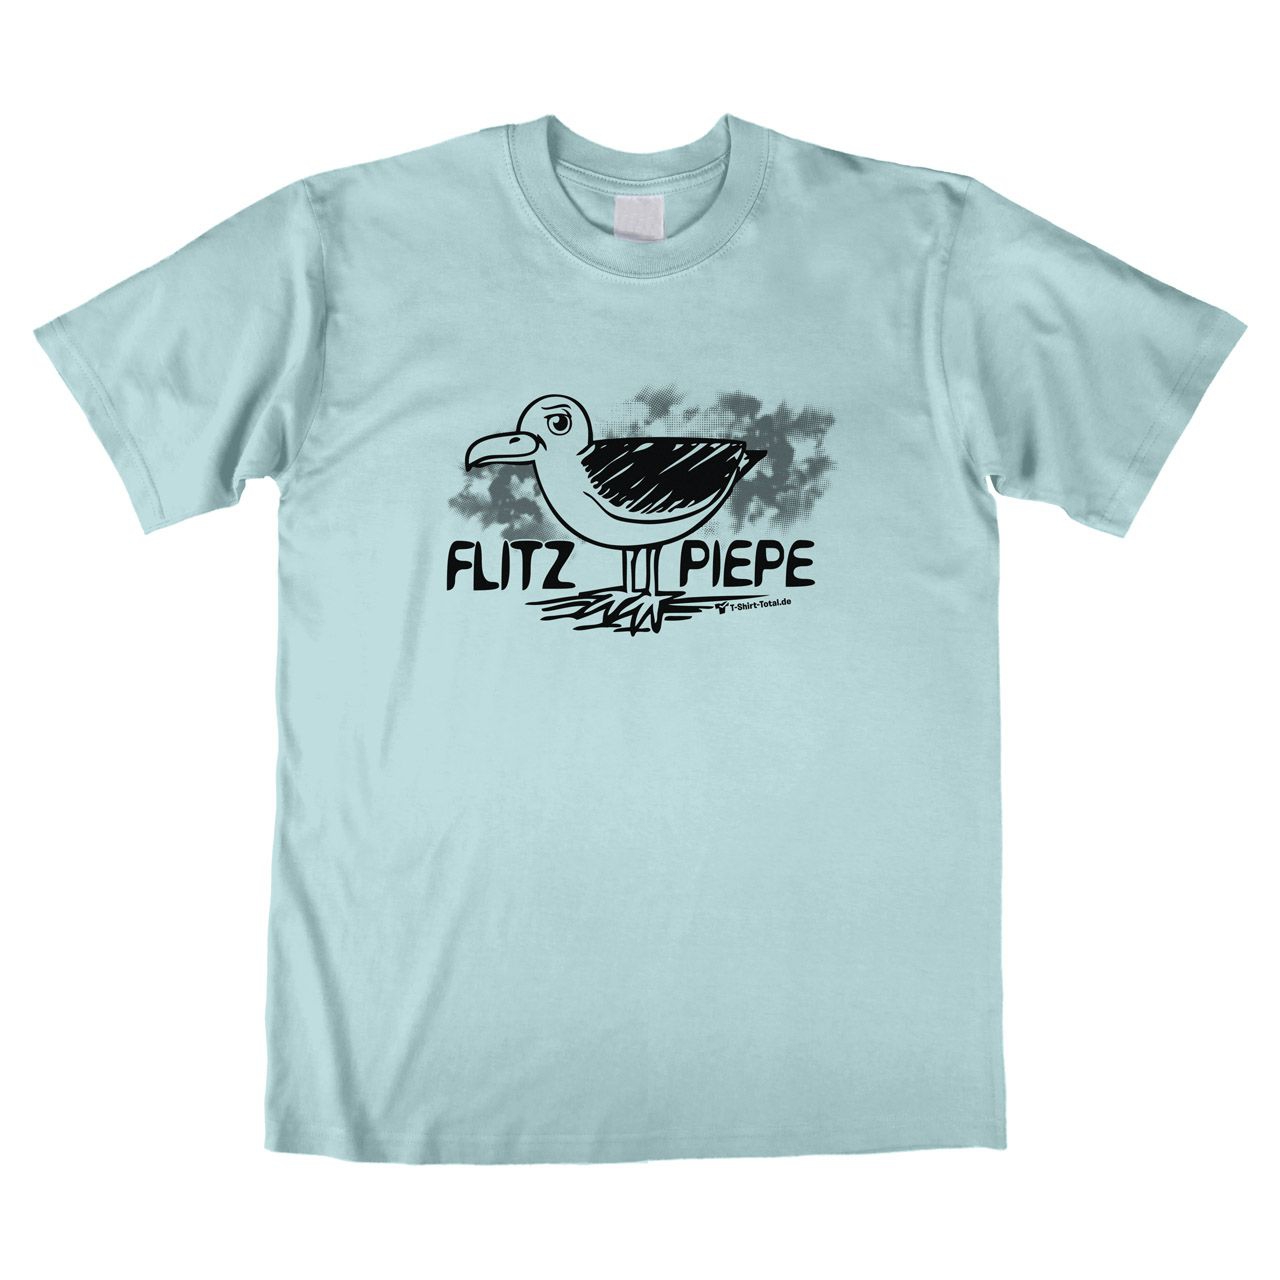 Flitzpiepe Unisex T-Shirt mint Medium